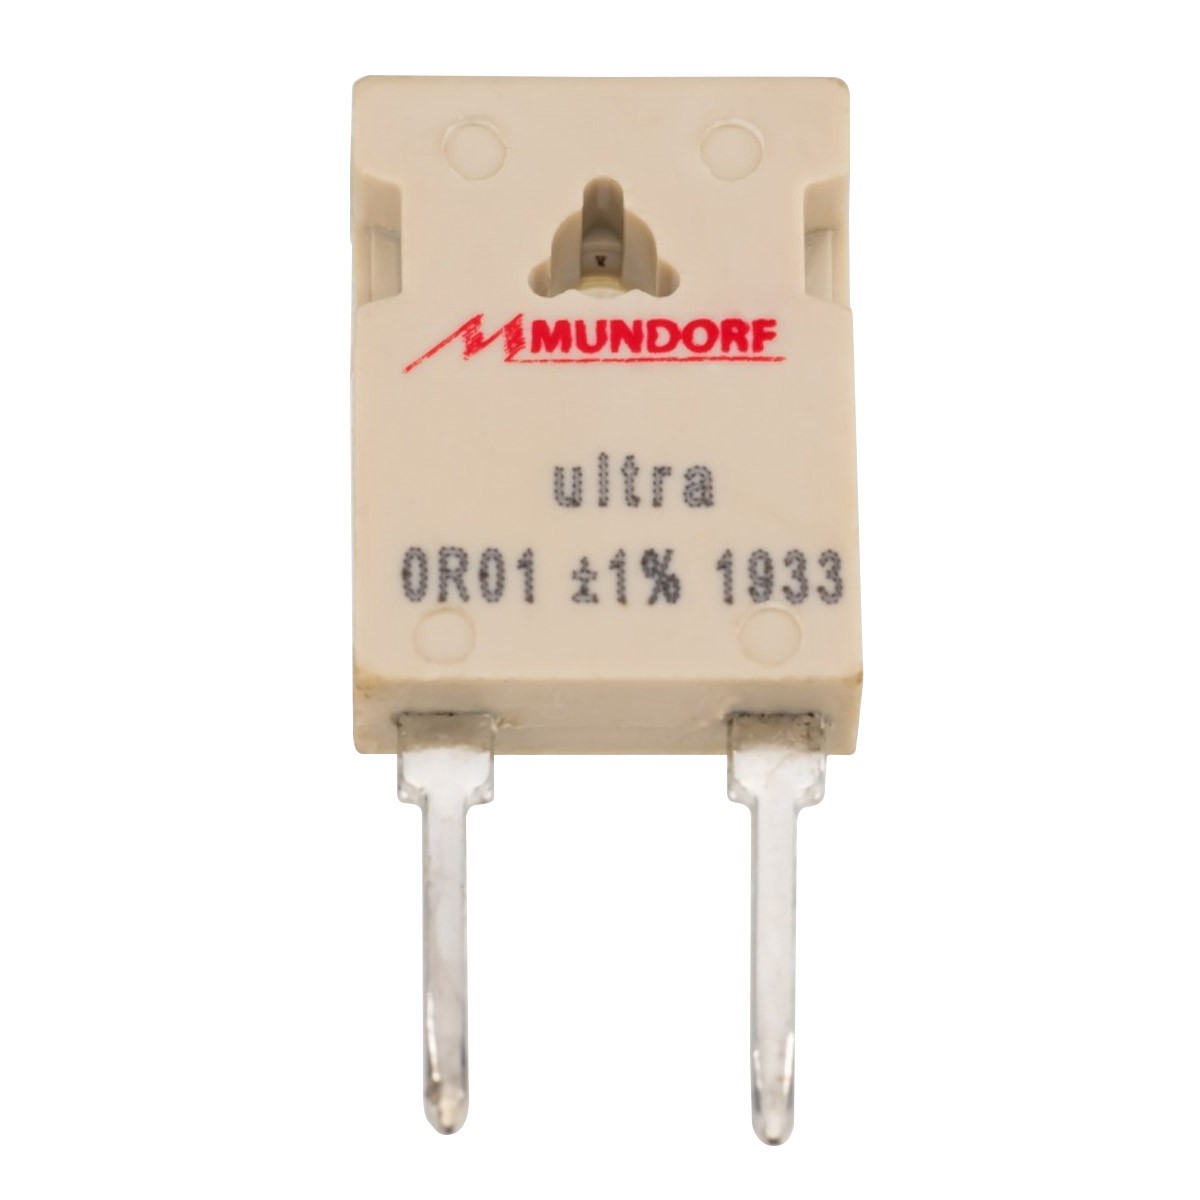 MUNDORF MRESIST ULTRA Resistor 30W 4.7 Ohm